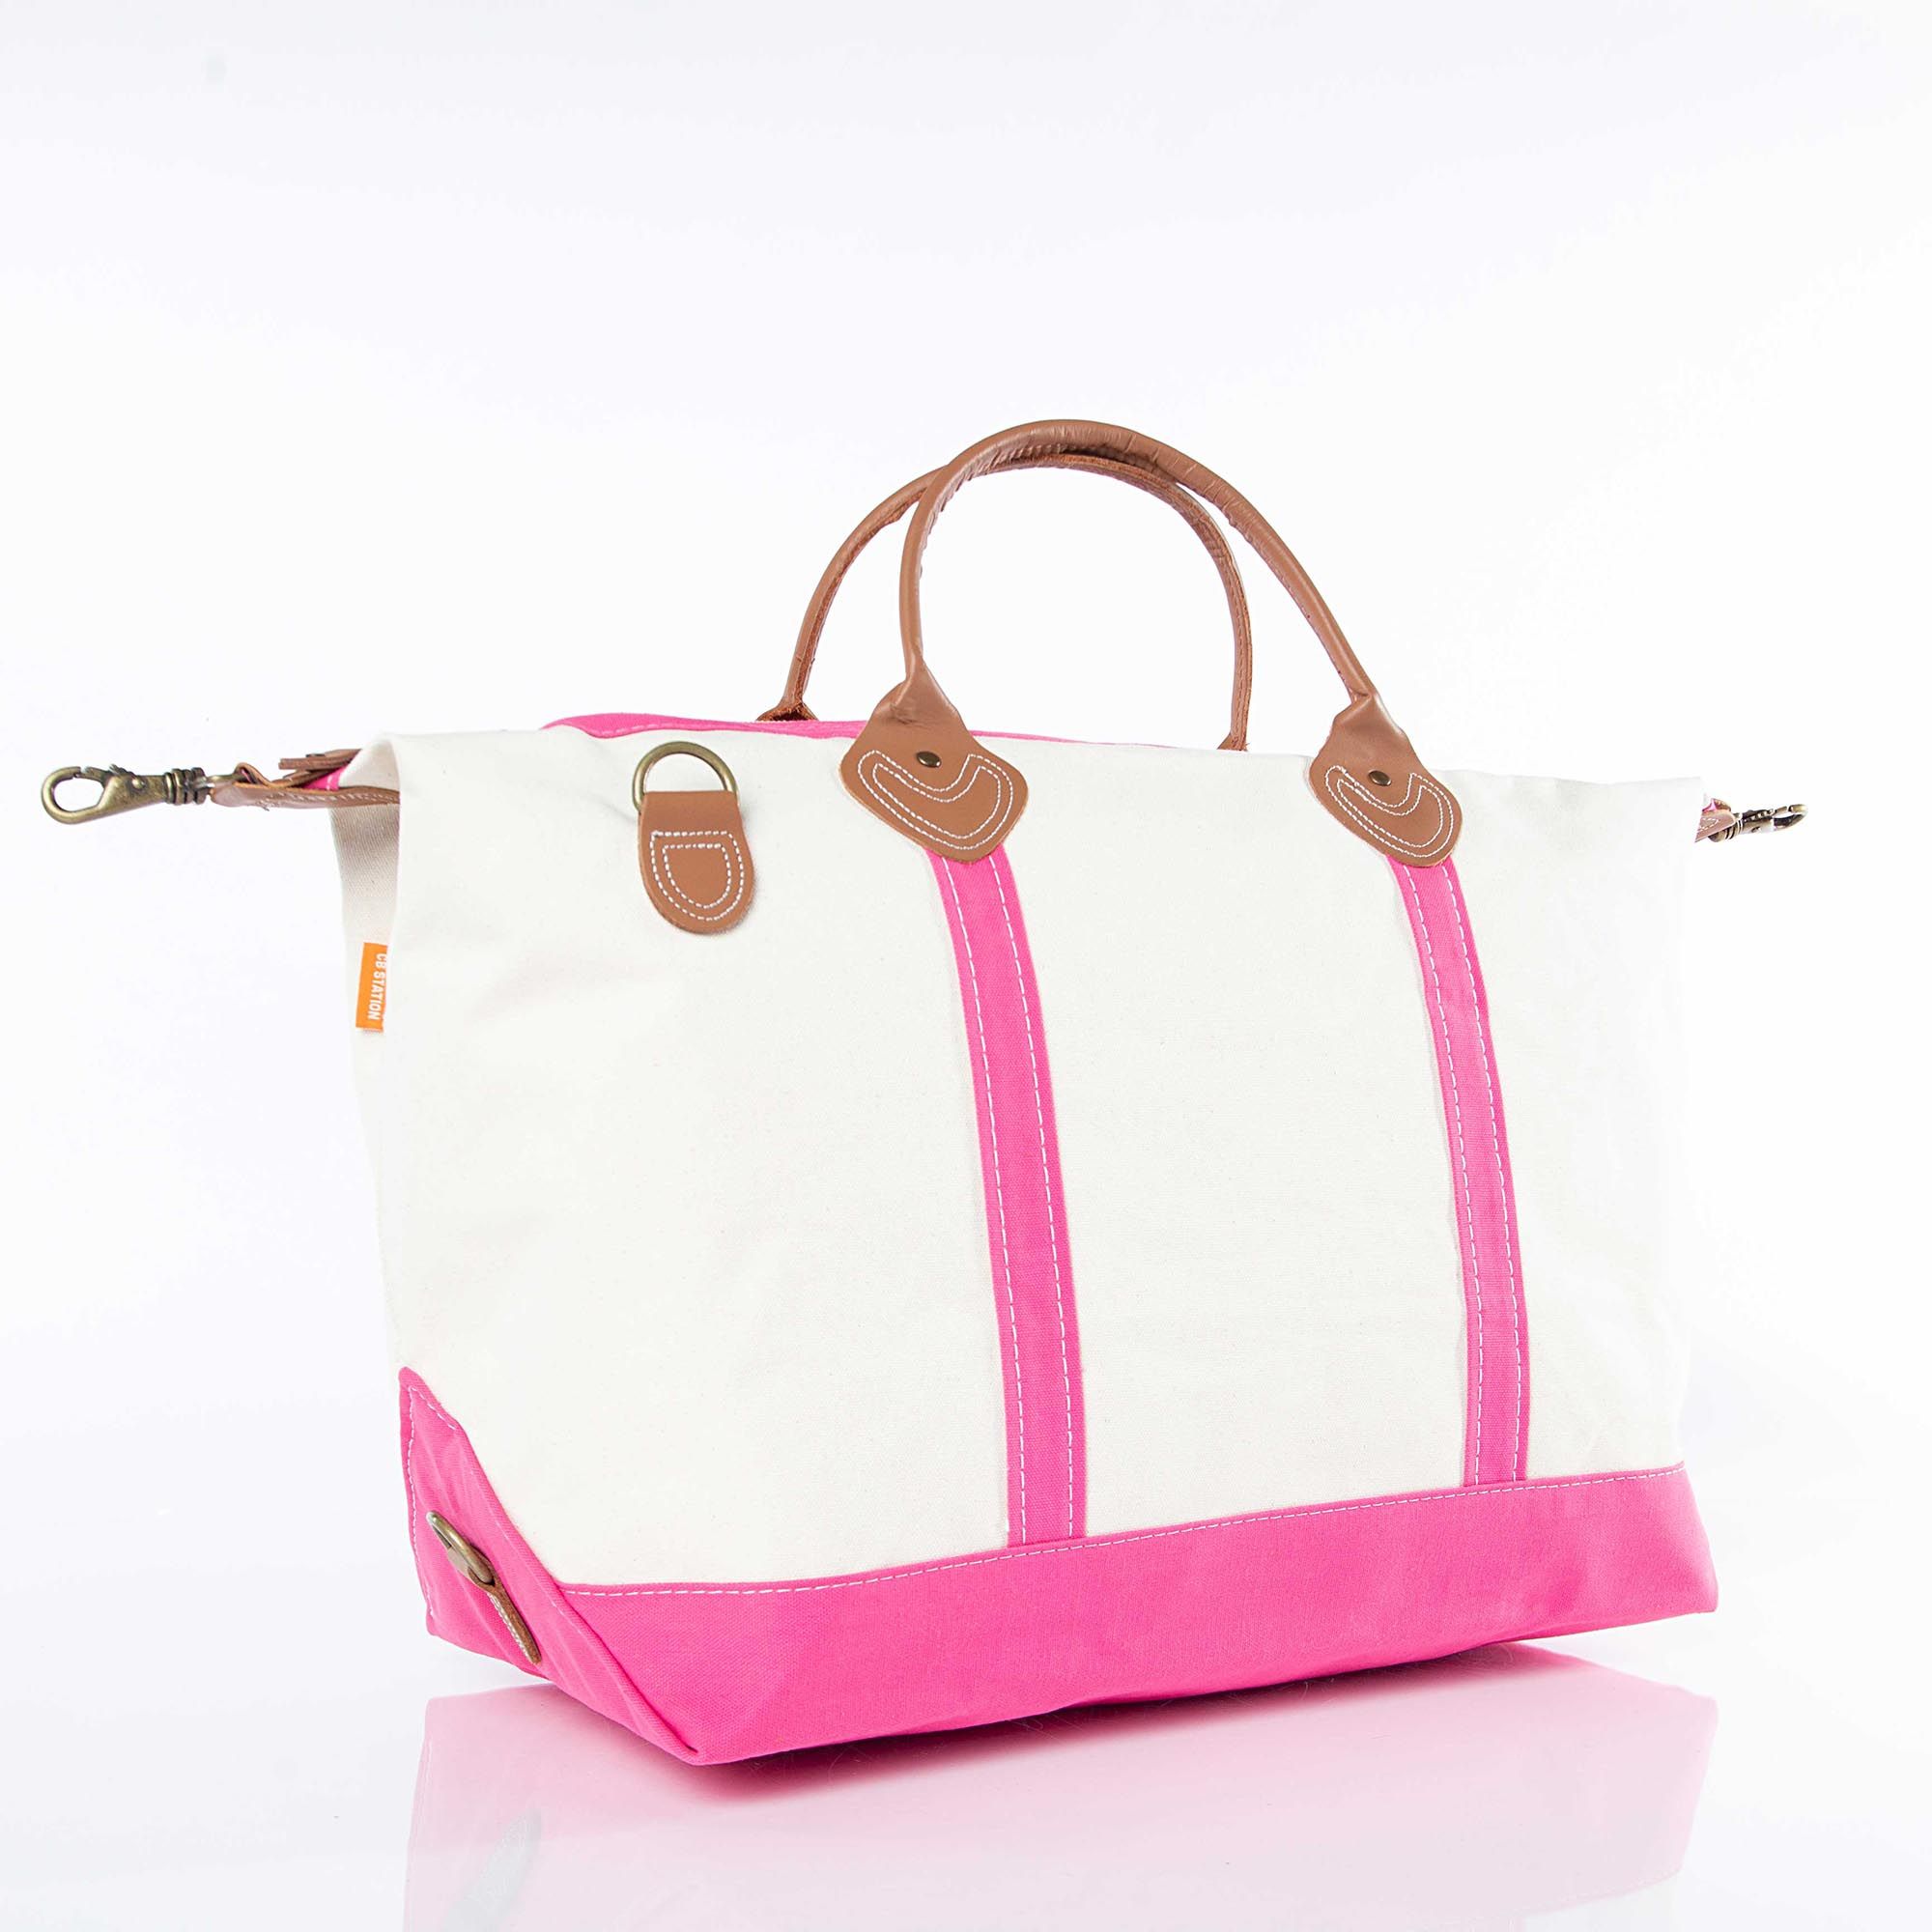 Weekender Bag Women Duffle Bag for Women Overnight Bag Travel Bag Monogram  Duffel Bag Canvas Weekender Bag 